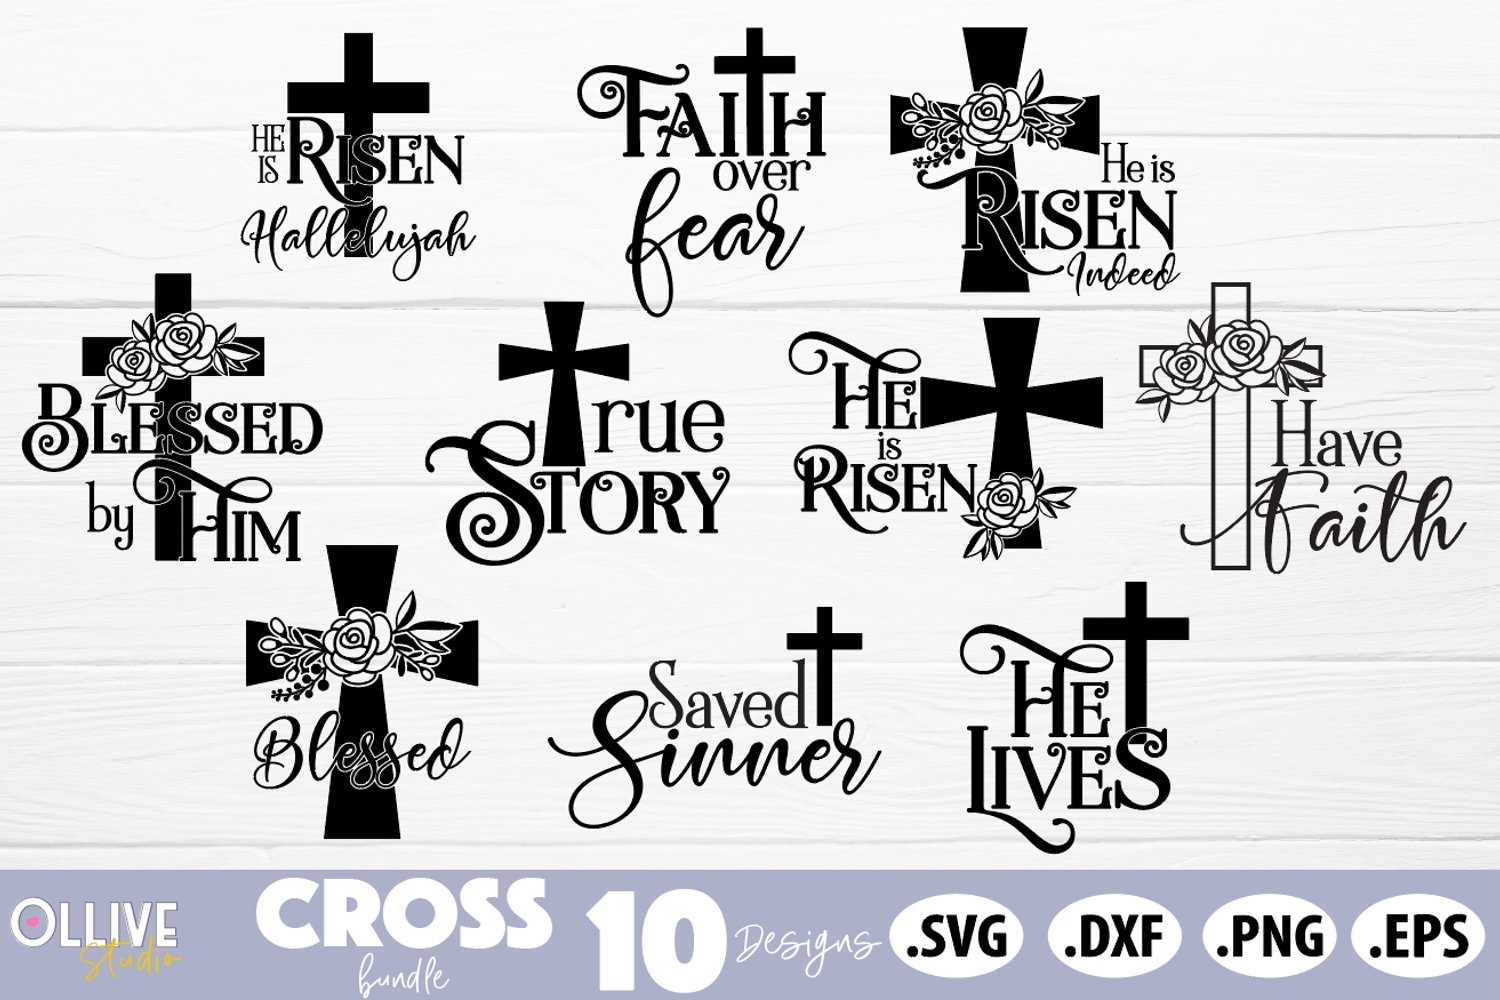 Cover image of Cross Bundle SVG.